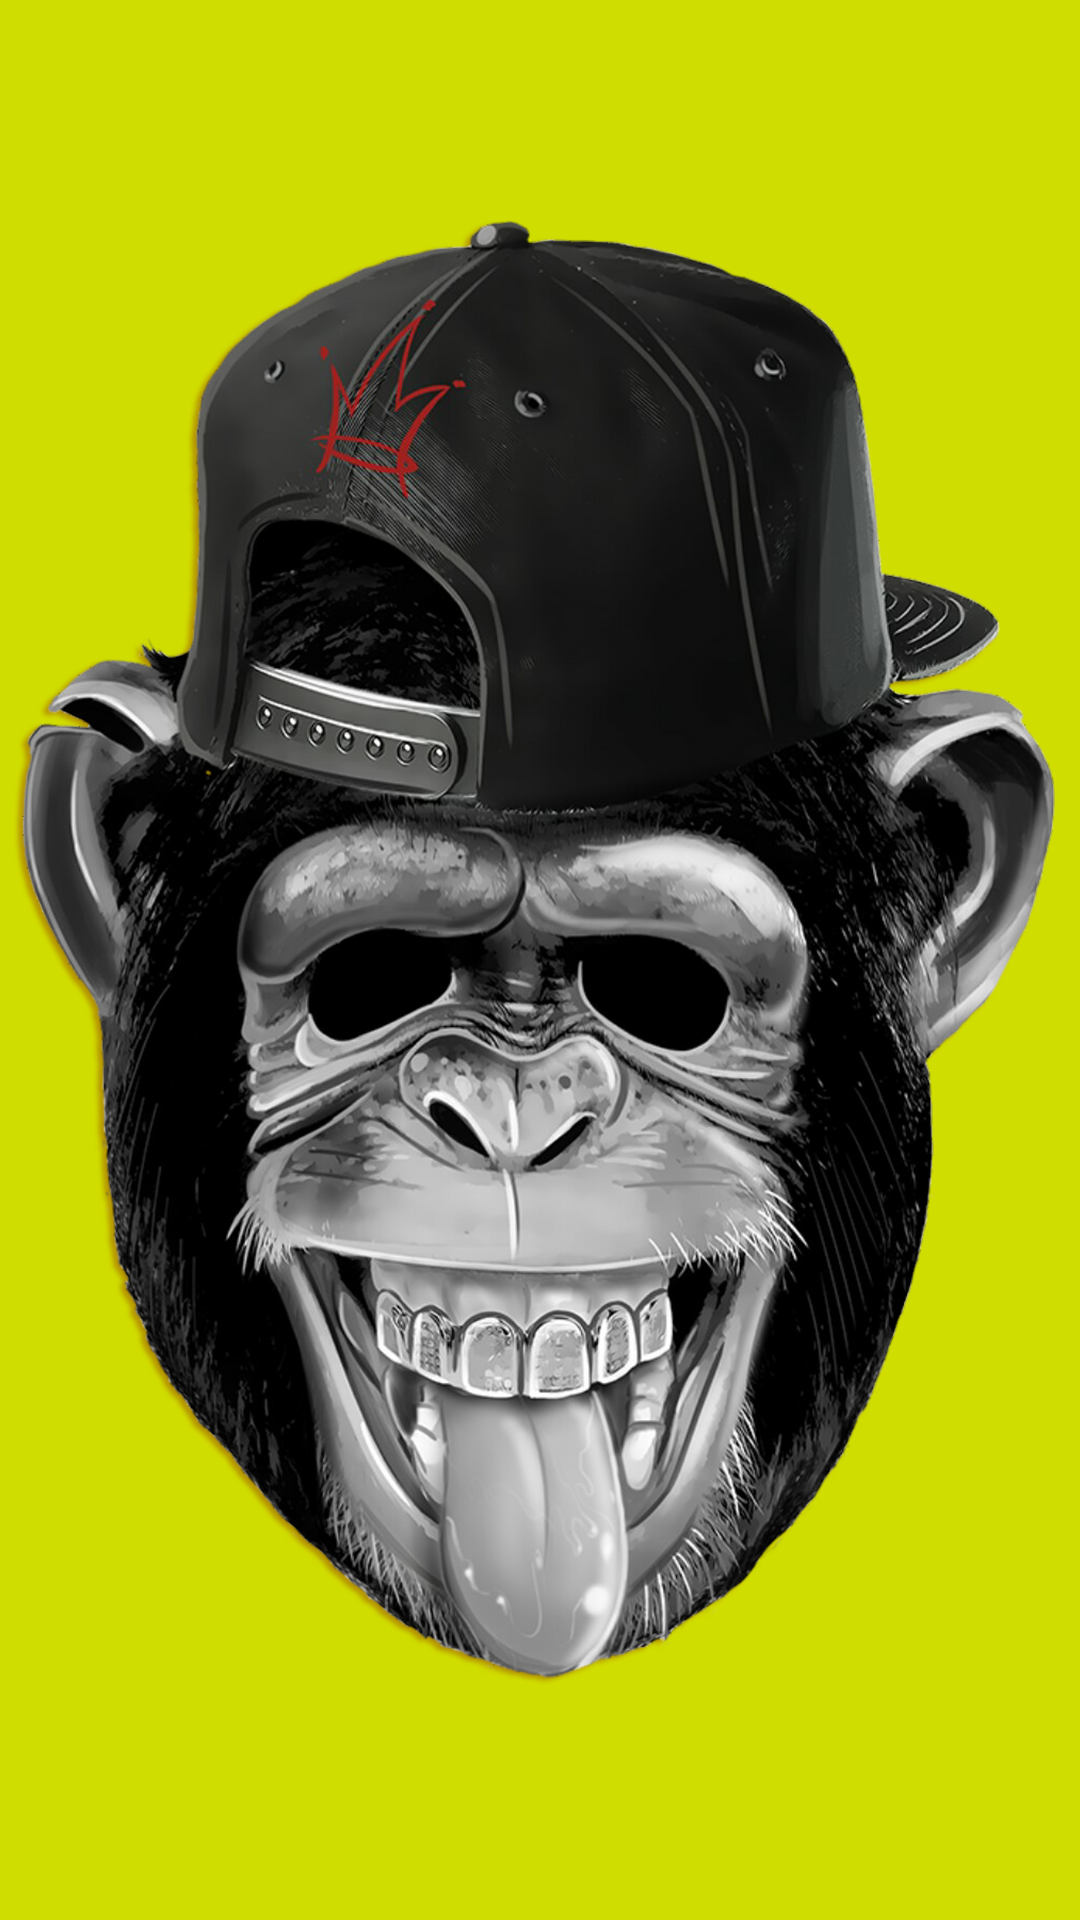 monkey wallpaper iphone,head,helmet,headgear,illustration,costume